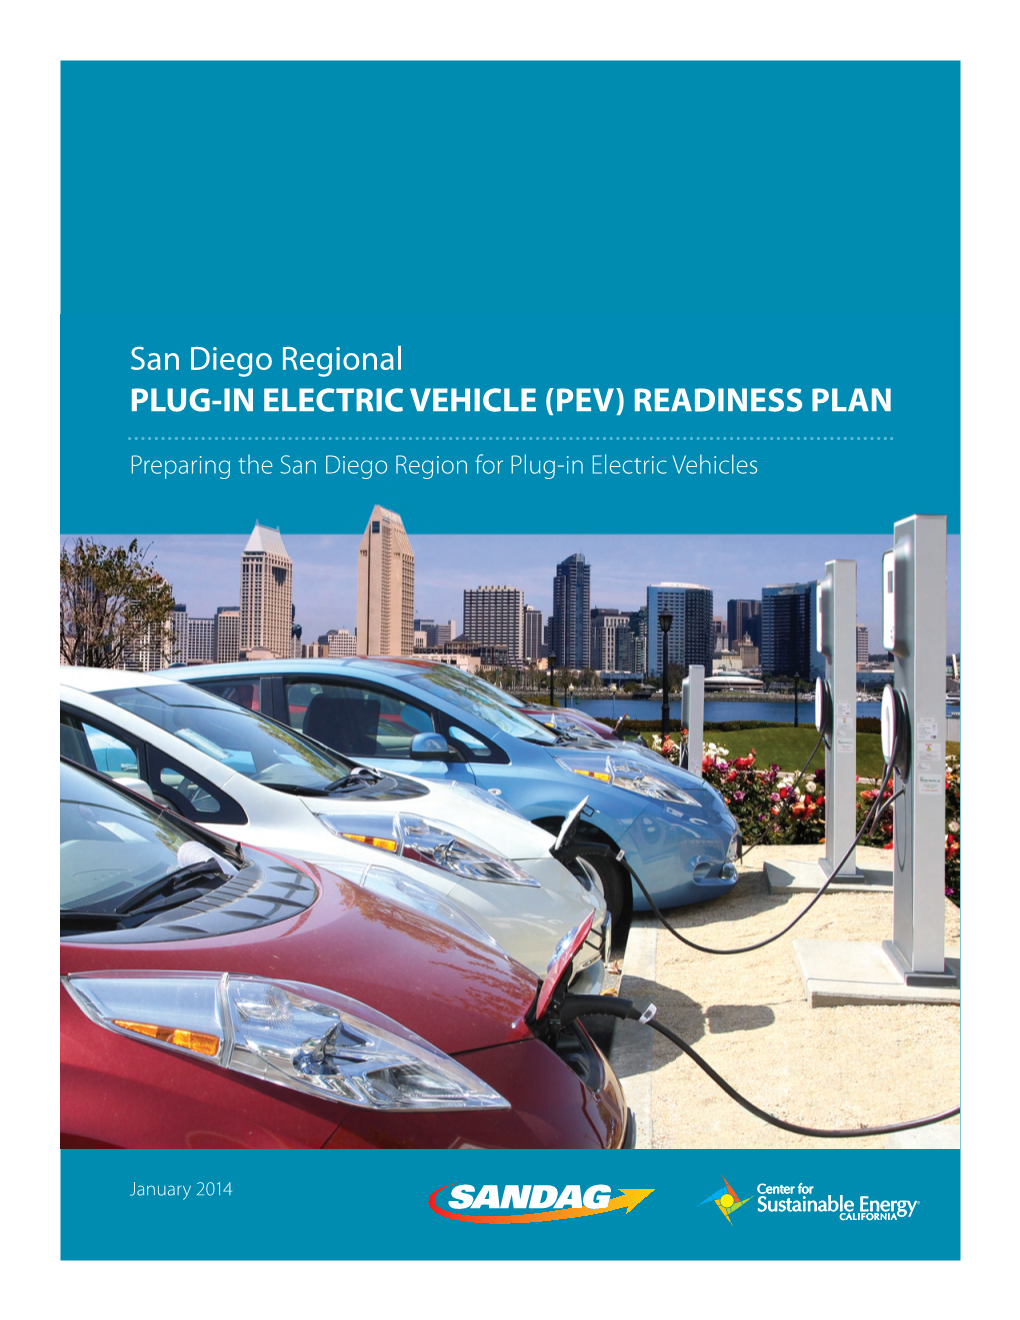 San Diego Regional PLUGIN ELECTRIC VEHICLE (PEV) READINESS PLAN DocsLib